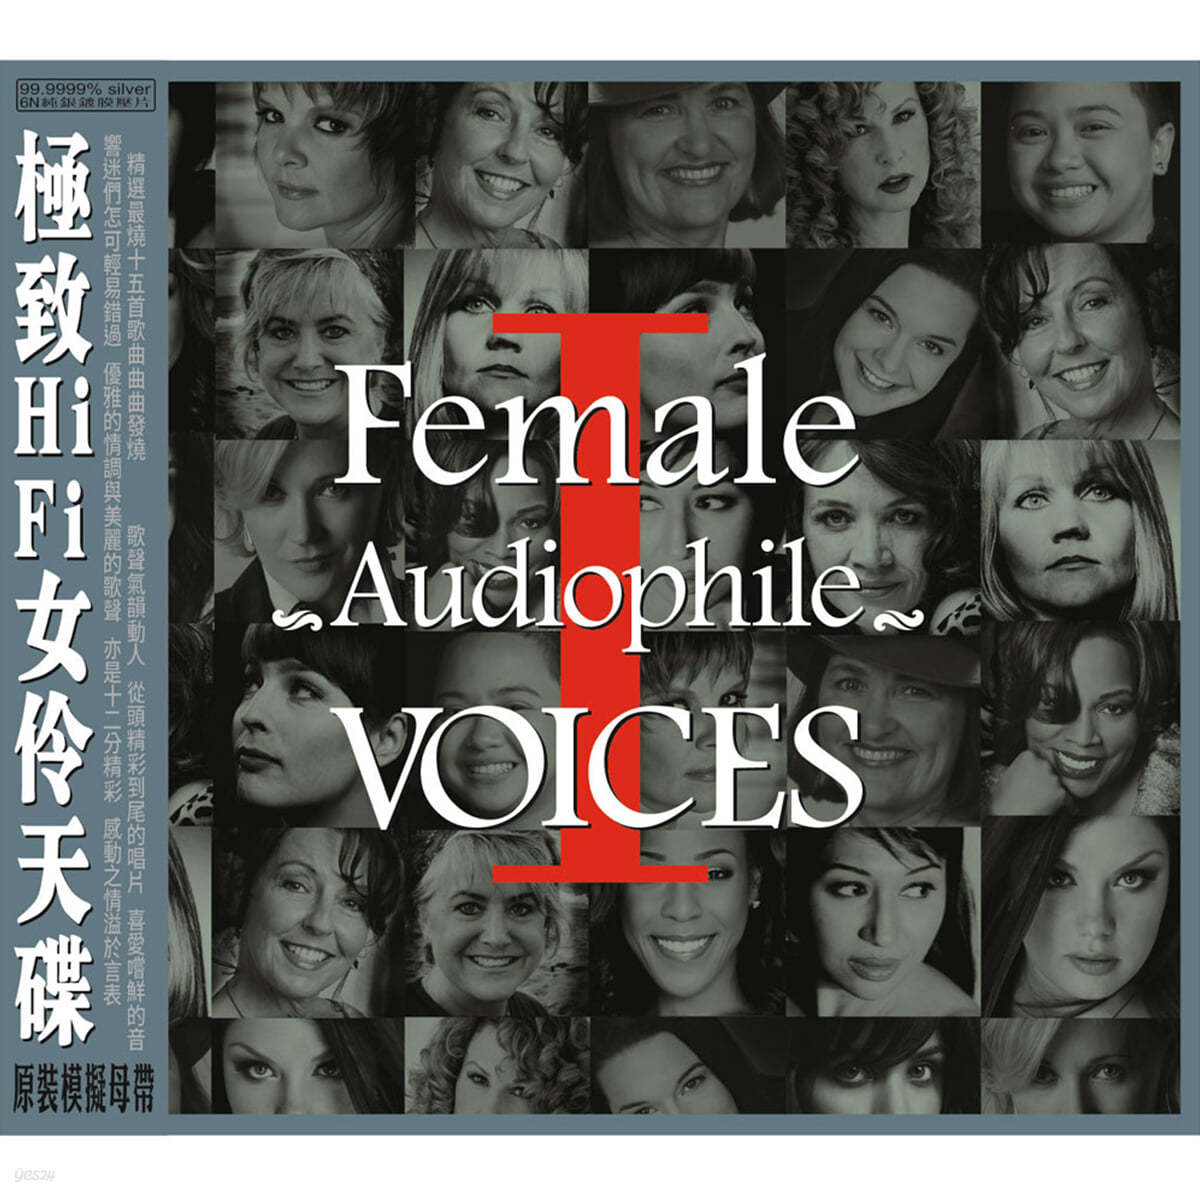 ABC레코드 -  MPA 협업 여성 보컬 모음집 (Female Audiophile Voices 1)